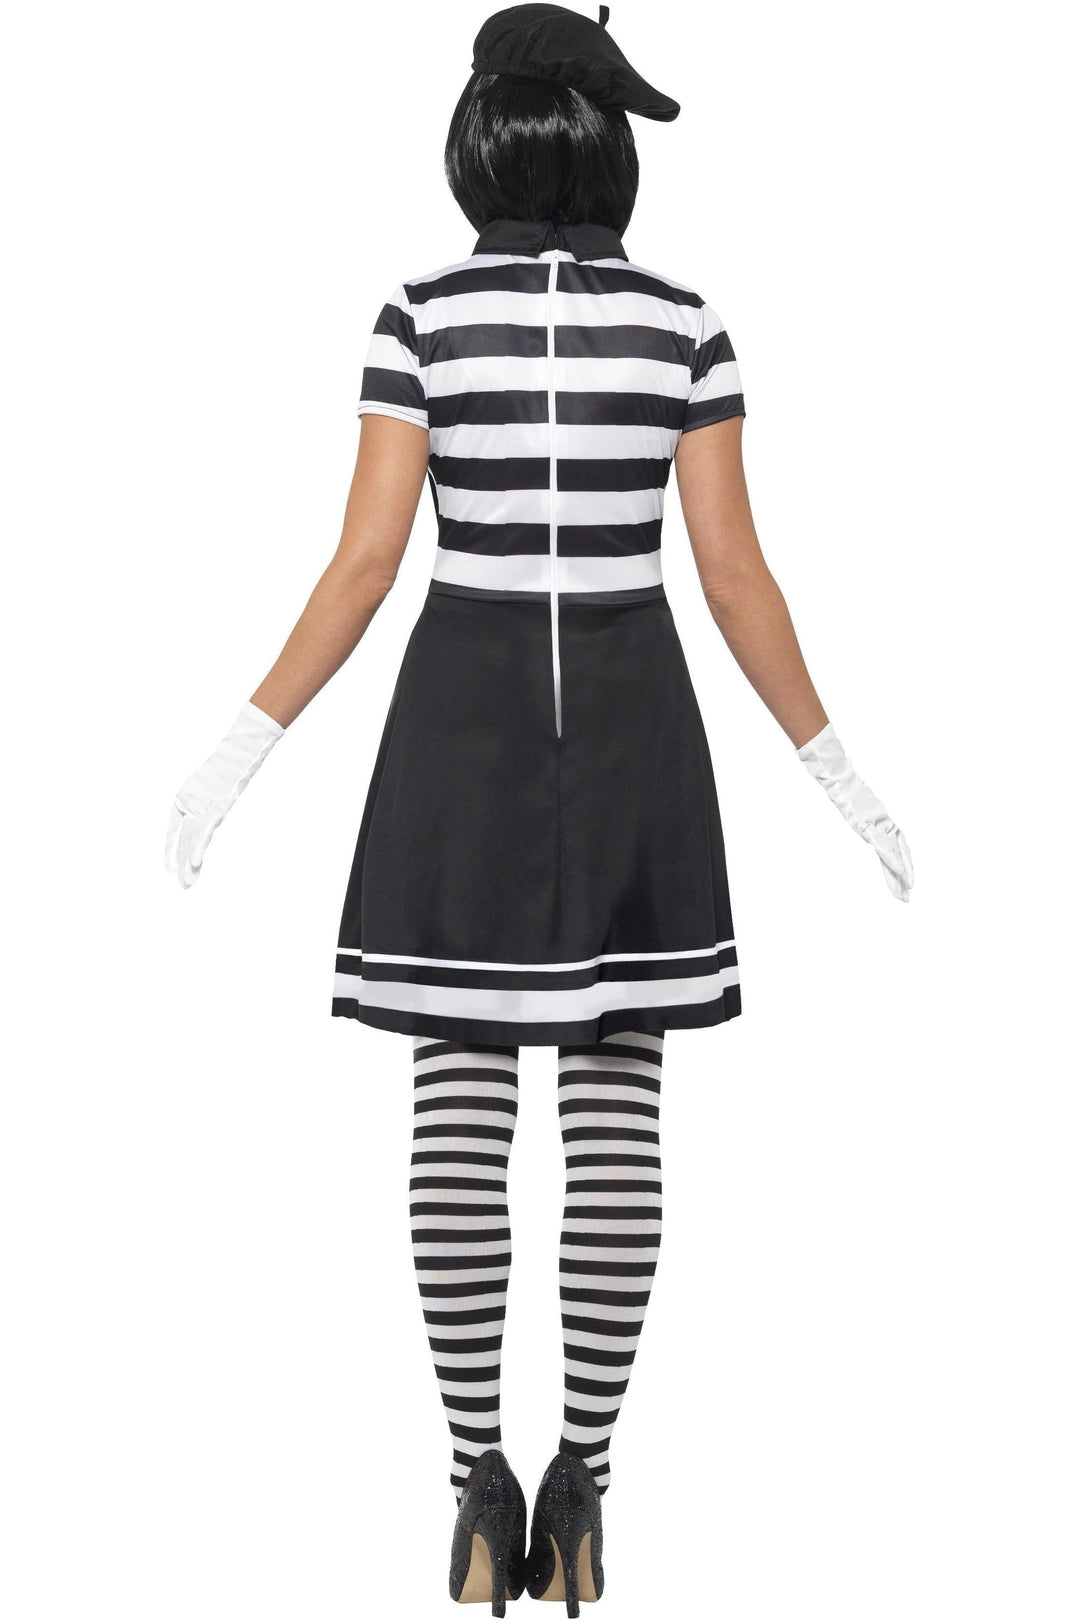 Lady Mime Artist Costume